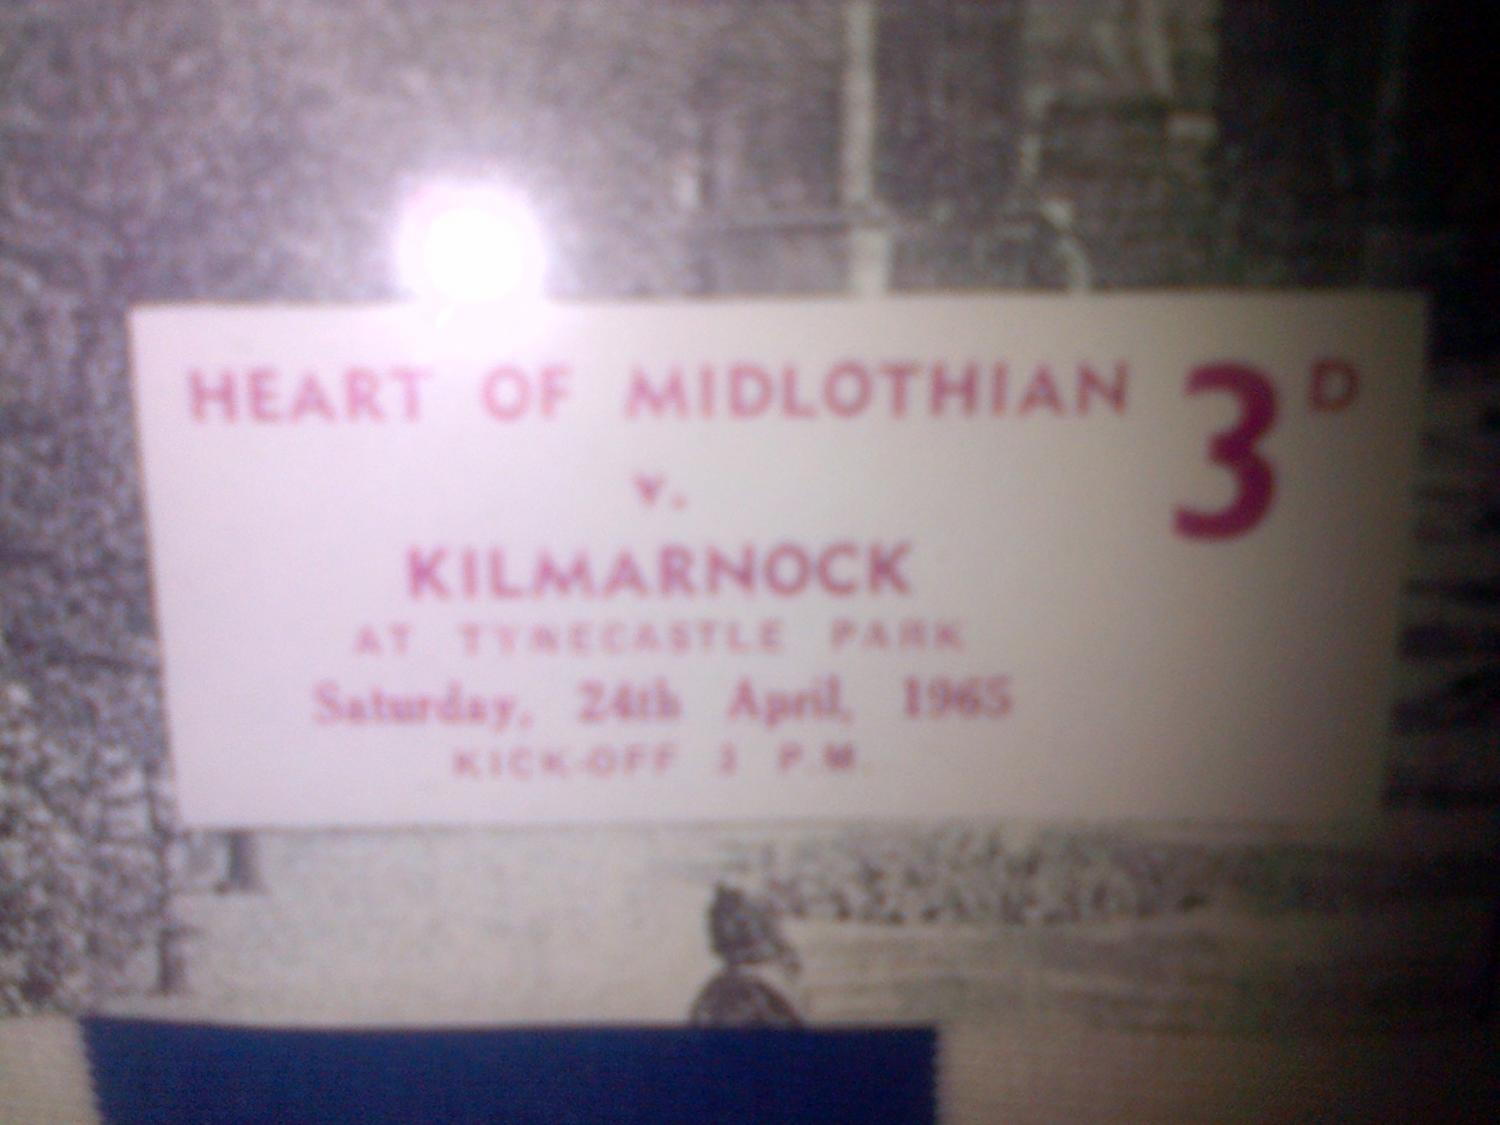 maillot de kilmarnock fc réplique 1963-1970 rétro